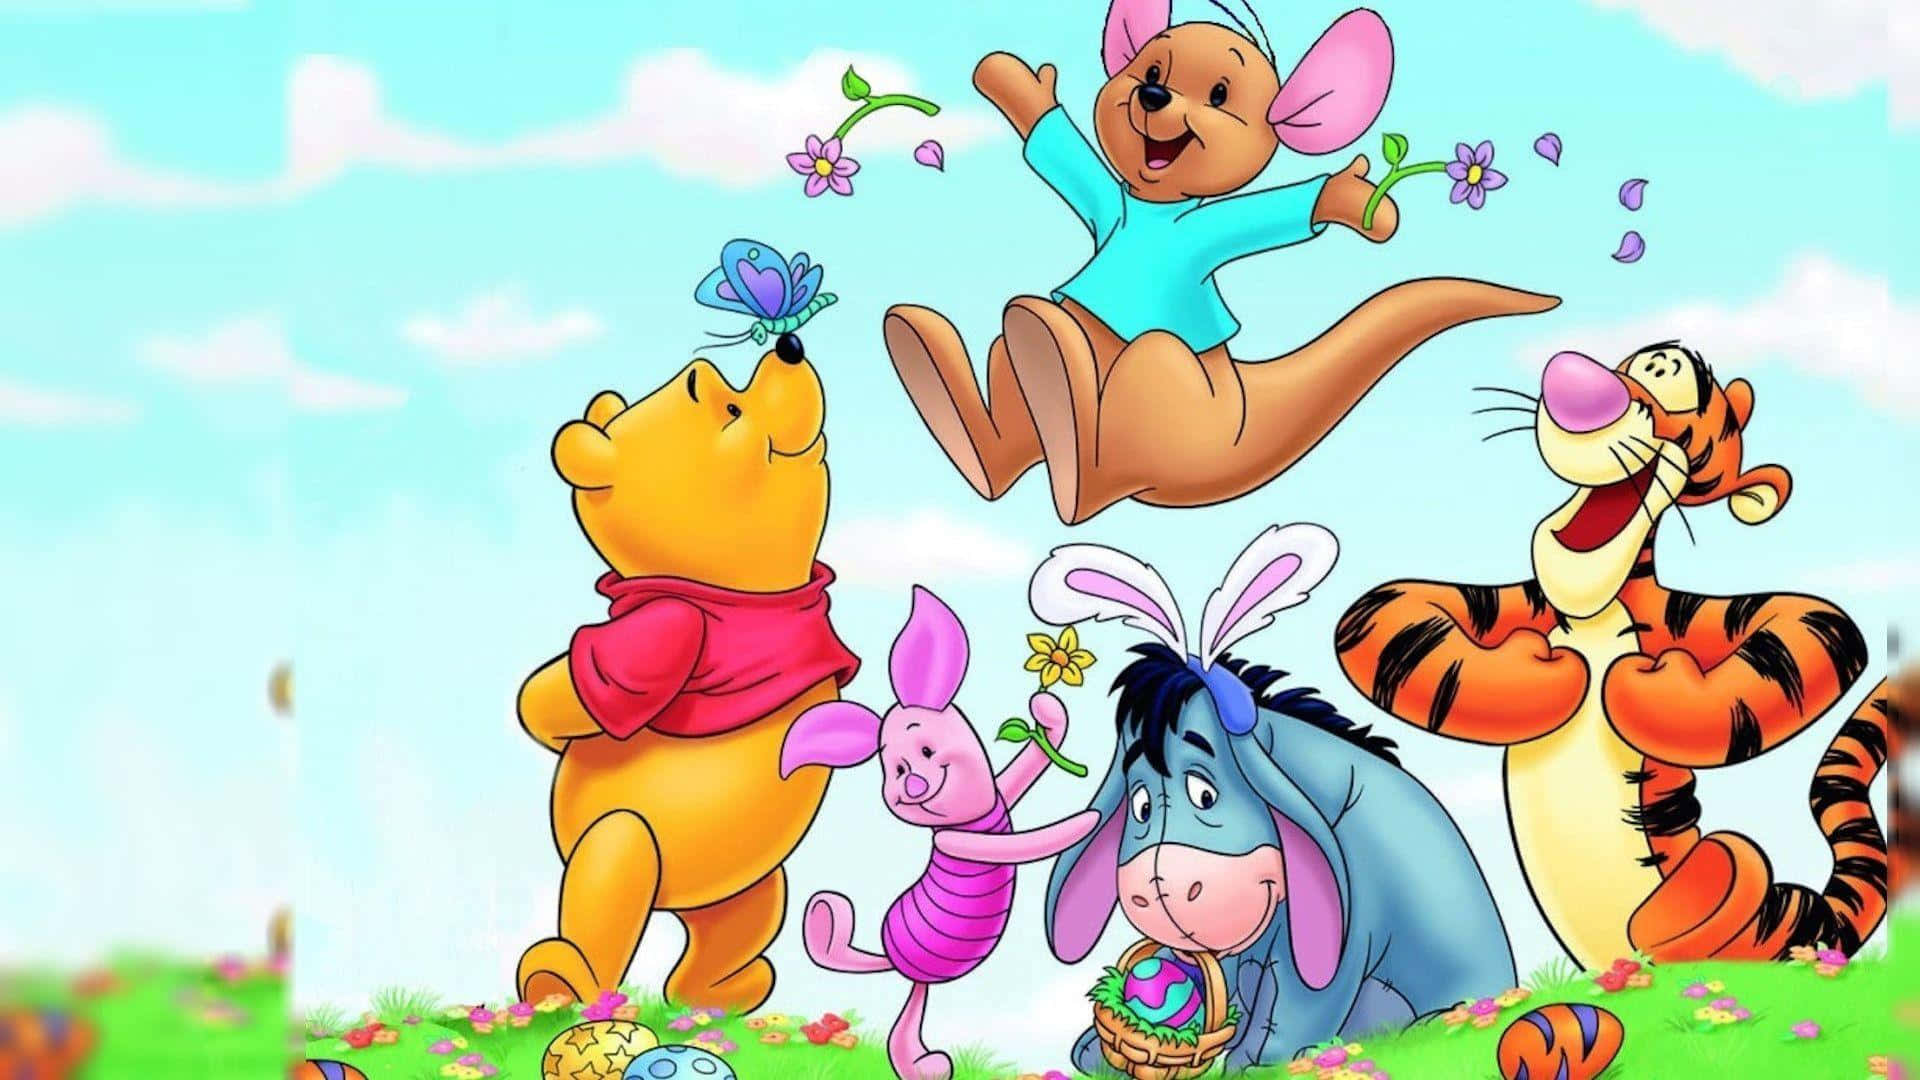 Celebrate nostalgia with Winnie The Pooh Classic Wallpaper